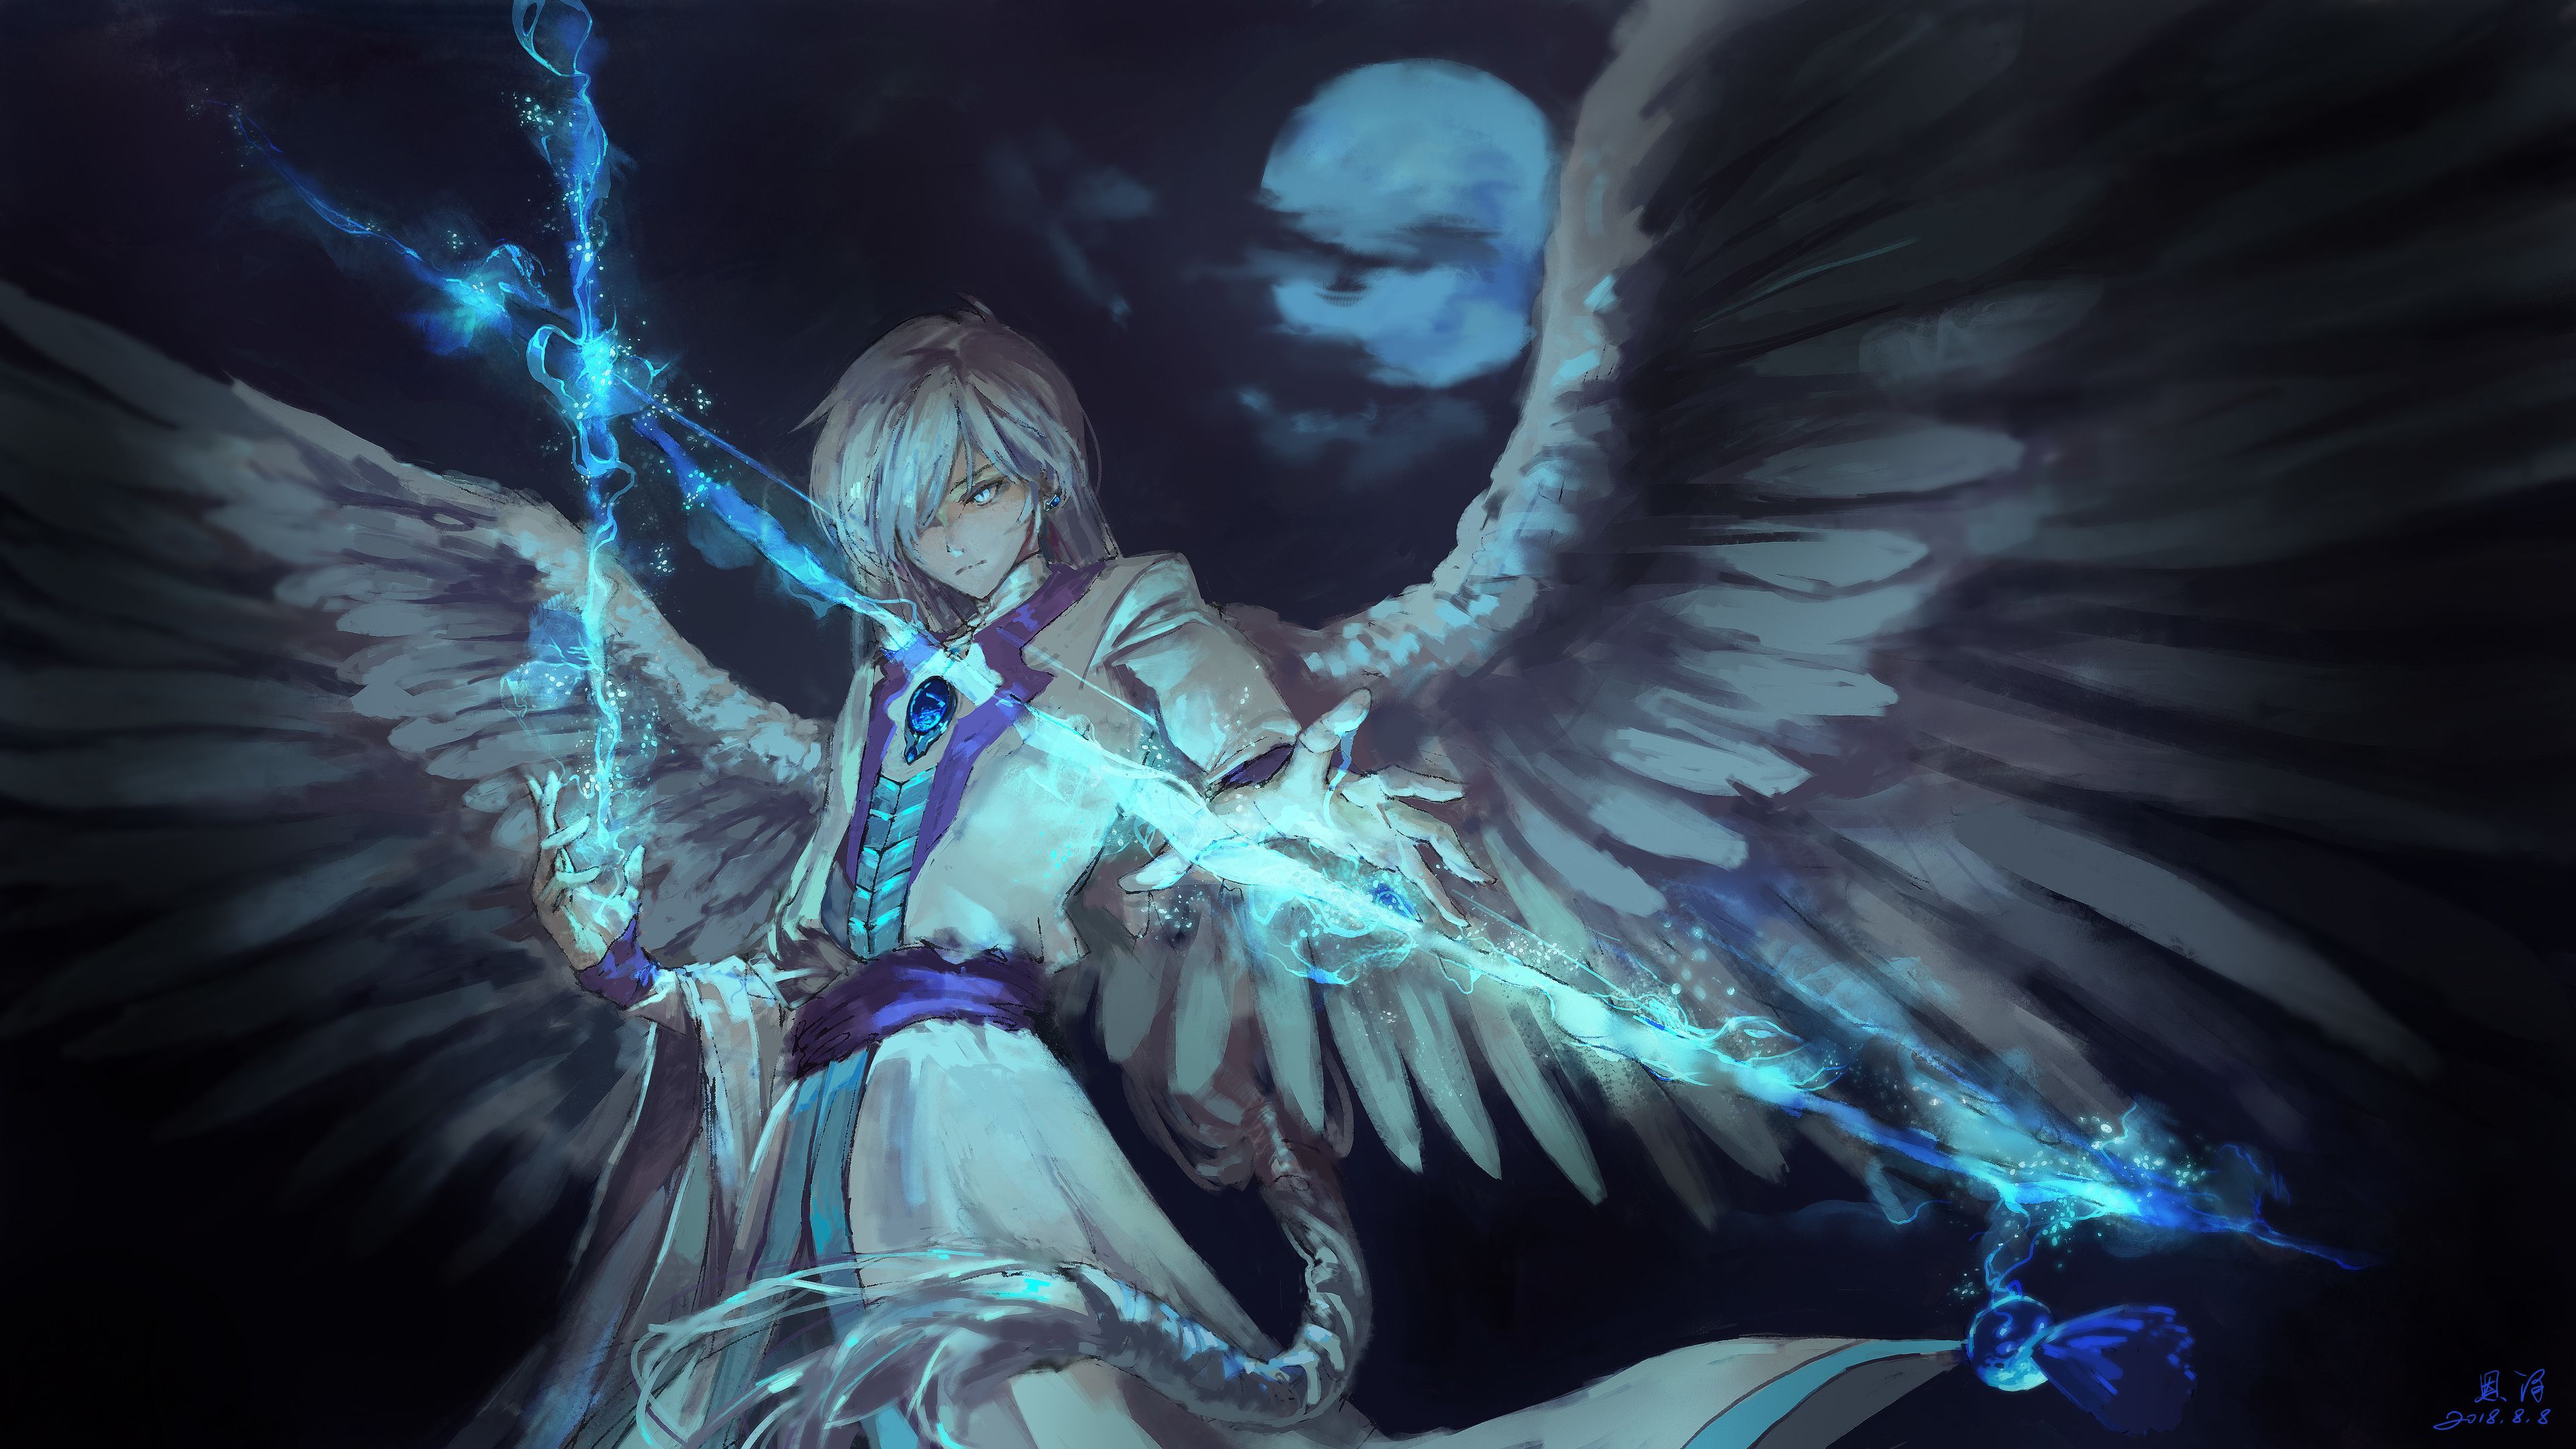 Anime angel Girl by Animereddy on DeviantArt